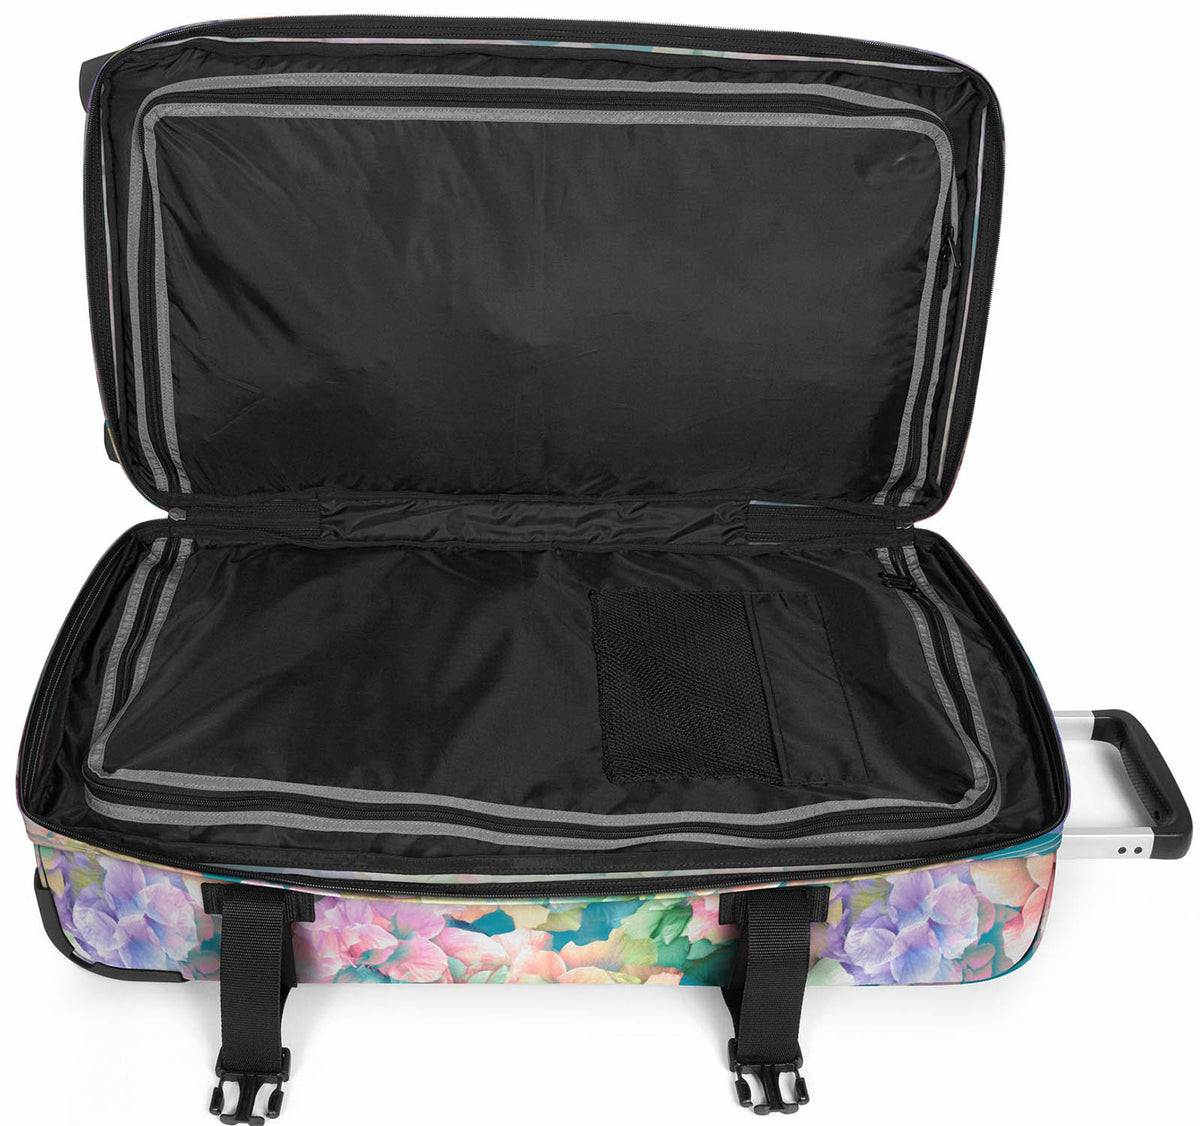 Eastpak Transit'R M Suitcase - Garden Soft